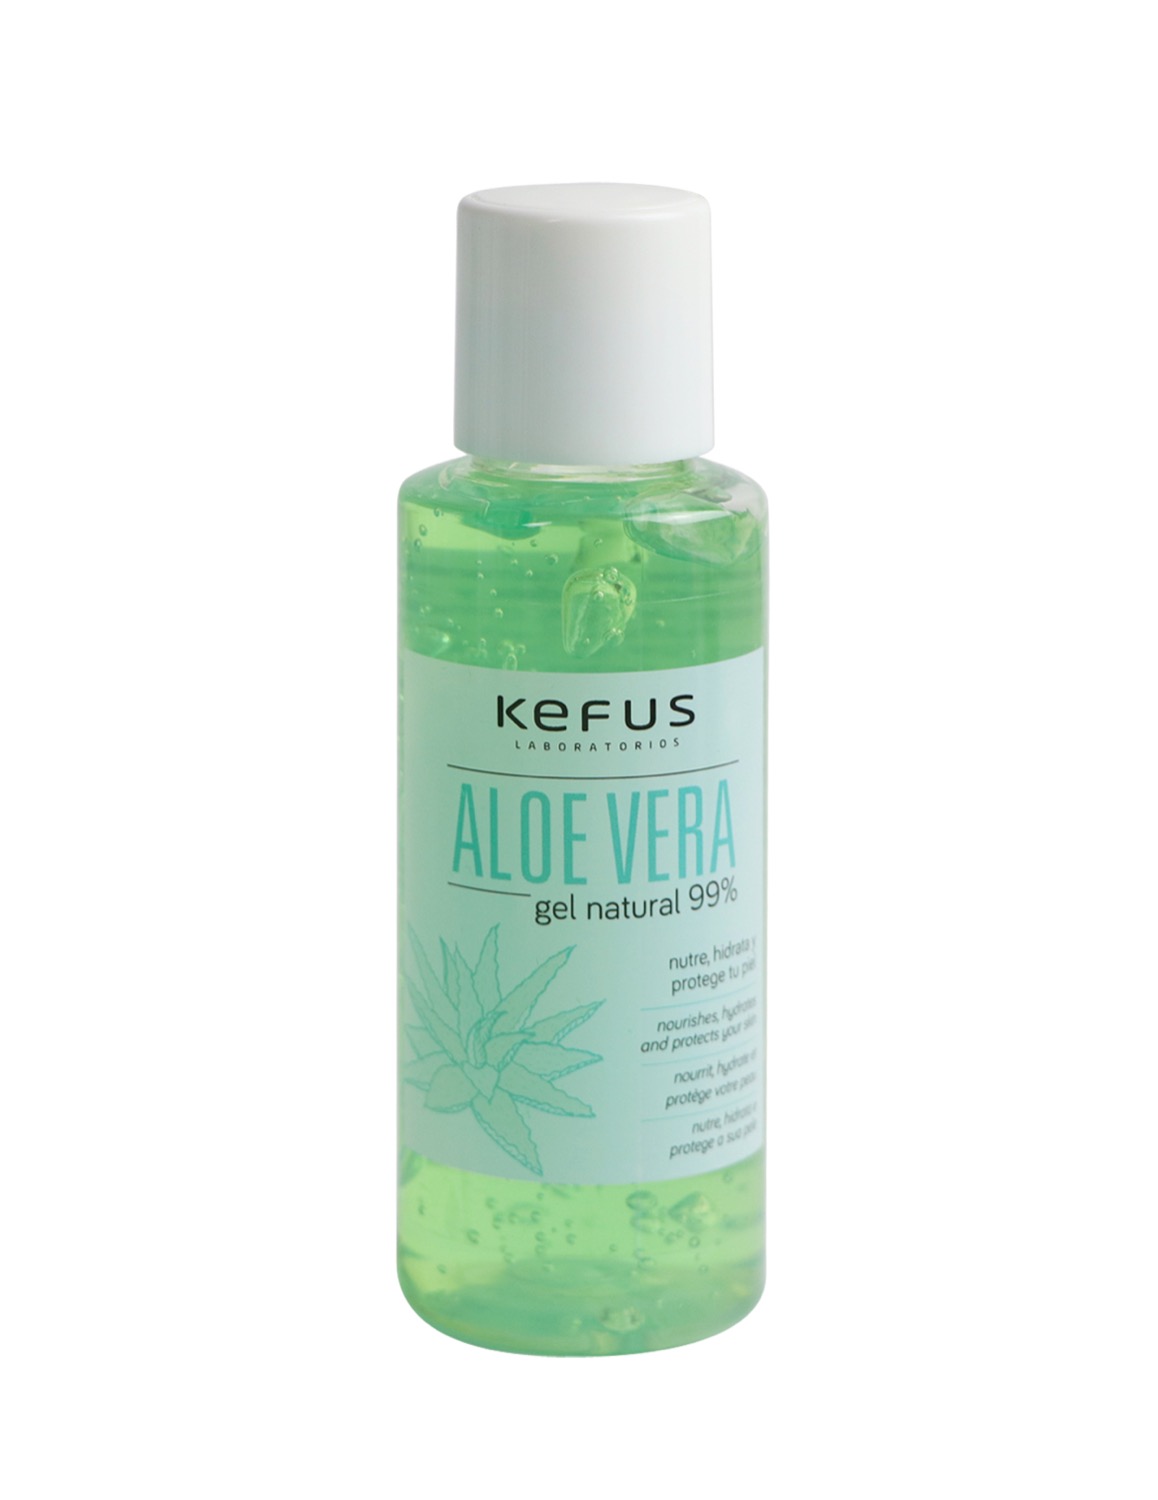 Gel de Aloe Vera natural verde Kefus. 100 ml